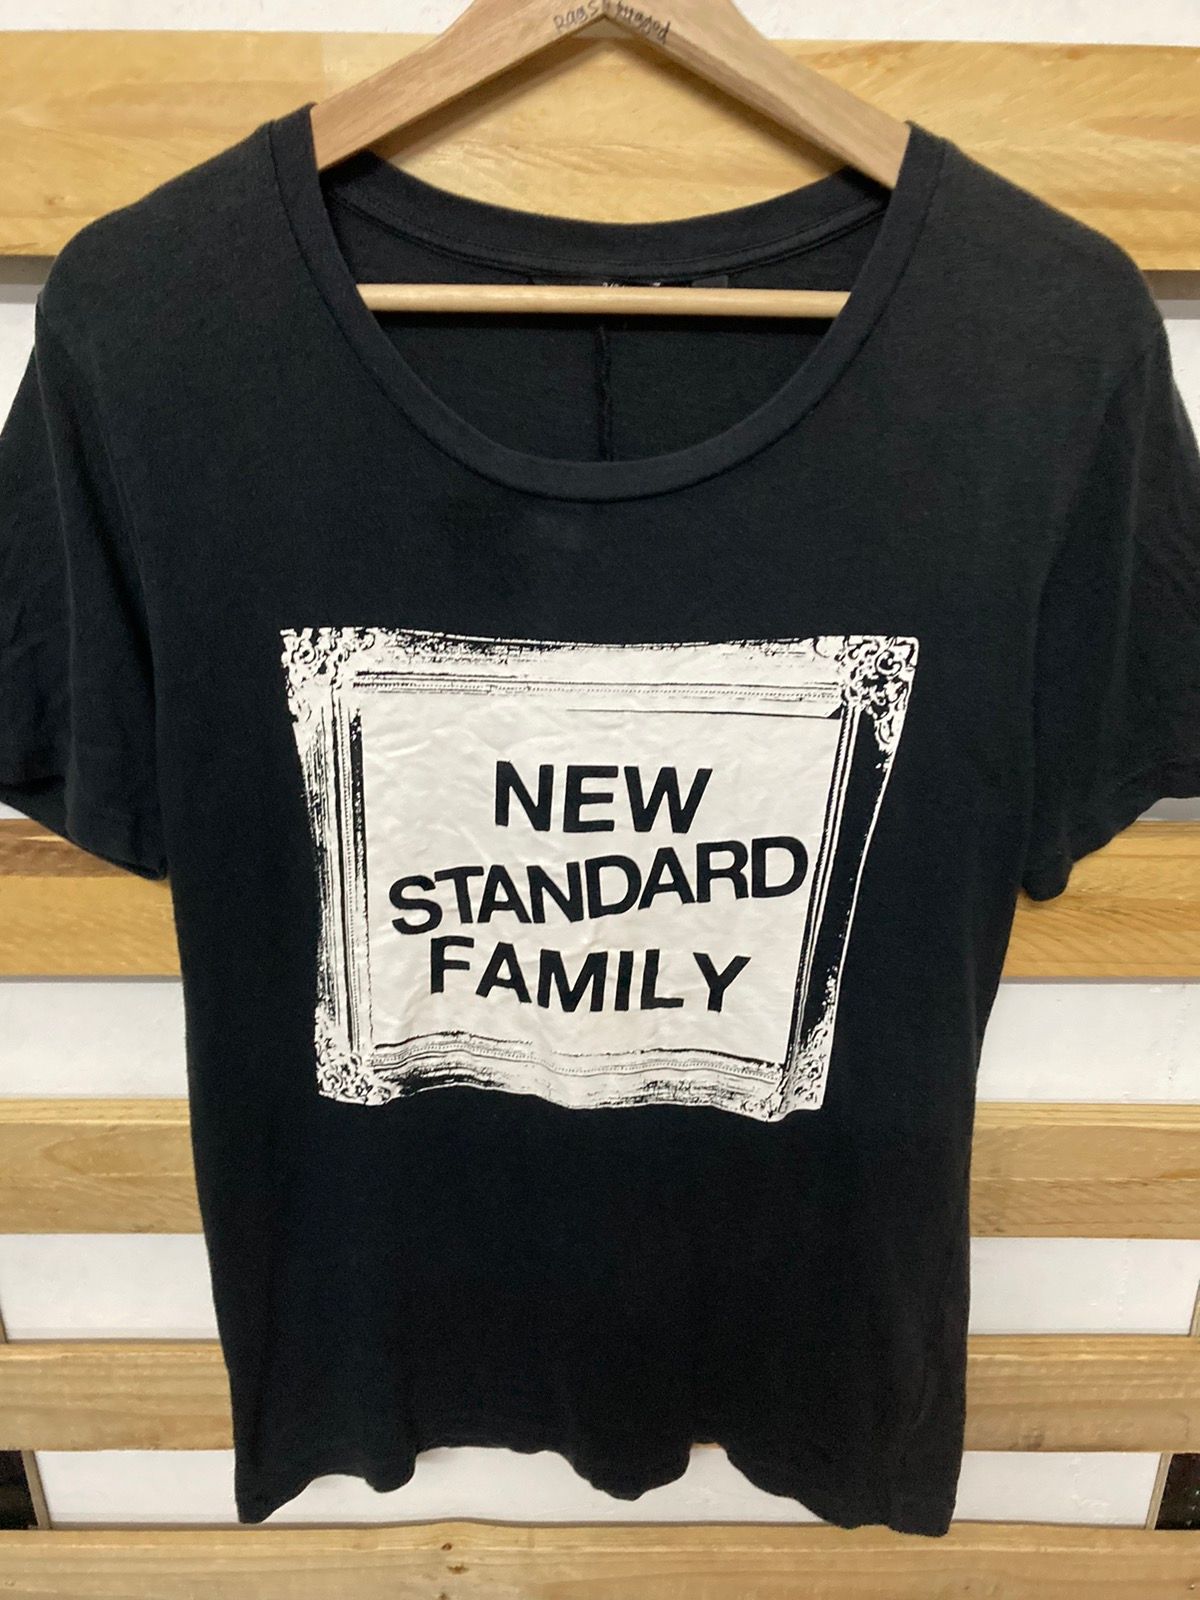 Uniqlo x Undercover New Standard Family Tshirt - 2